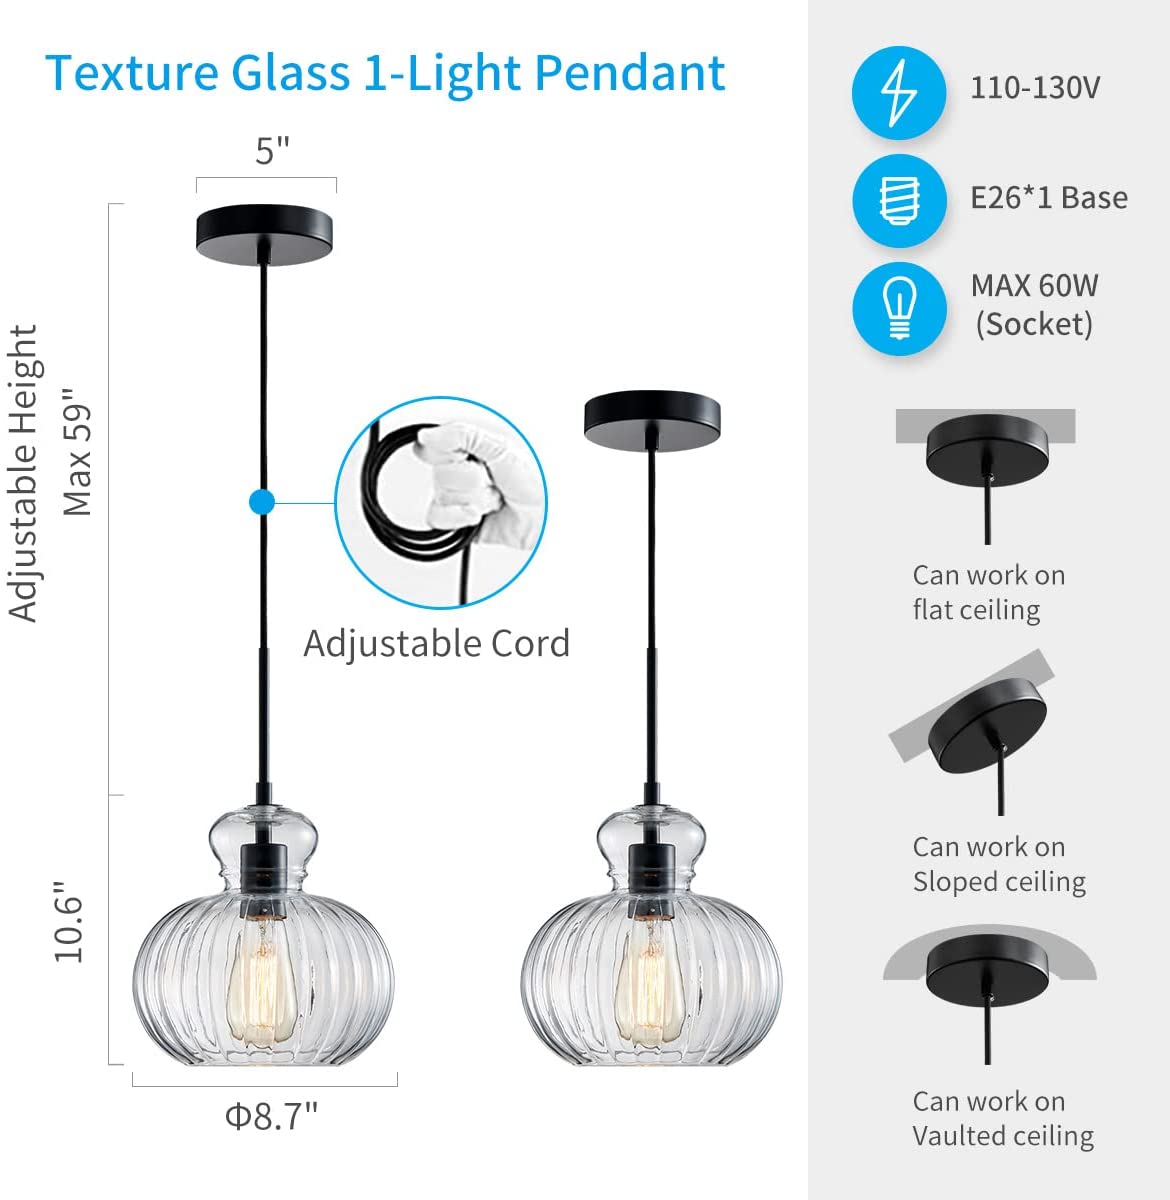 Farmhouse kitchen island pendant light glass globe pendant lamp lighting